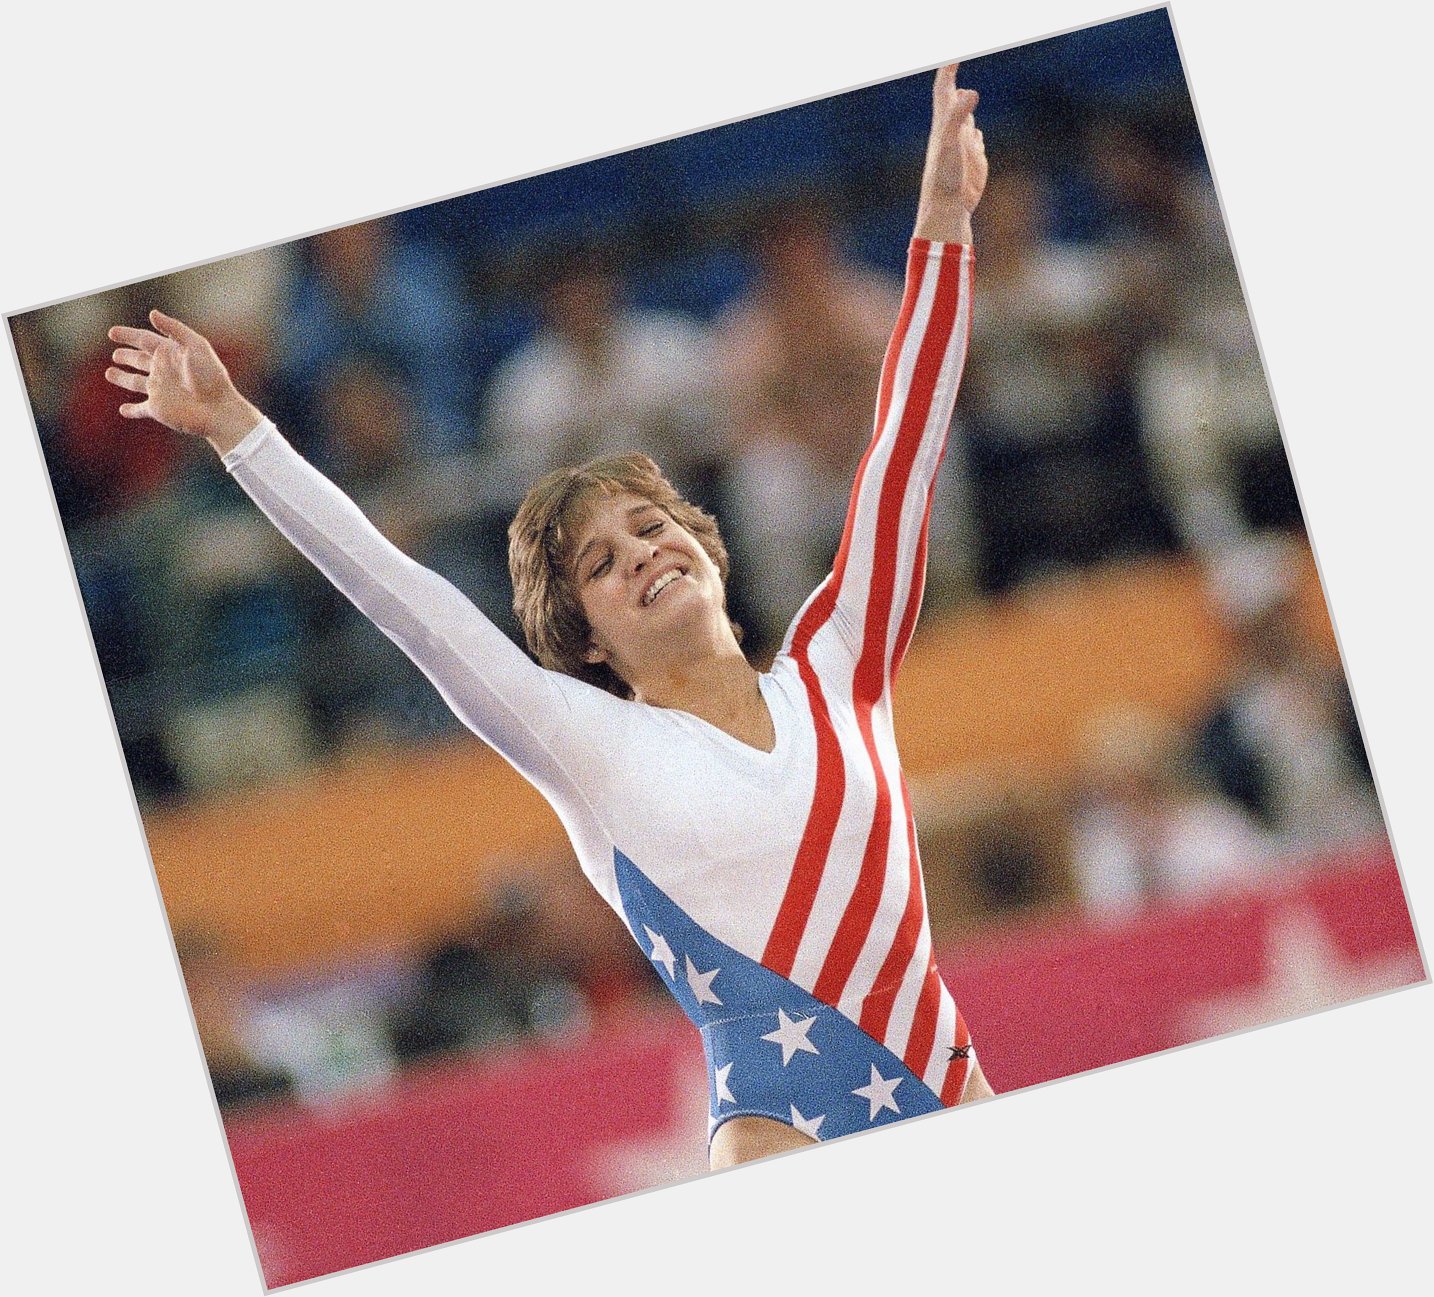 Happy birthday to Mary Lou Retton, seen here at the 1984 Olympics. 